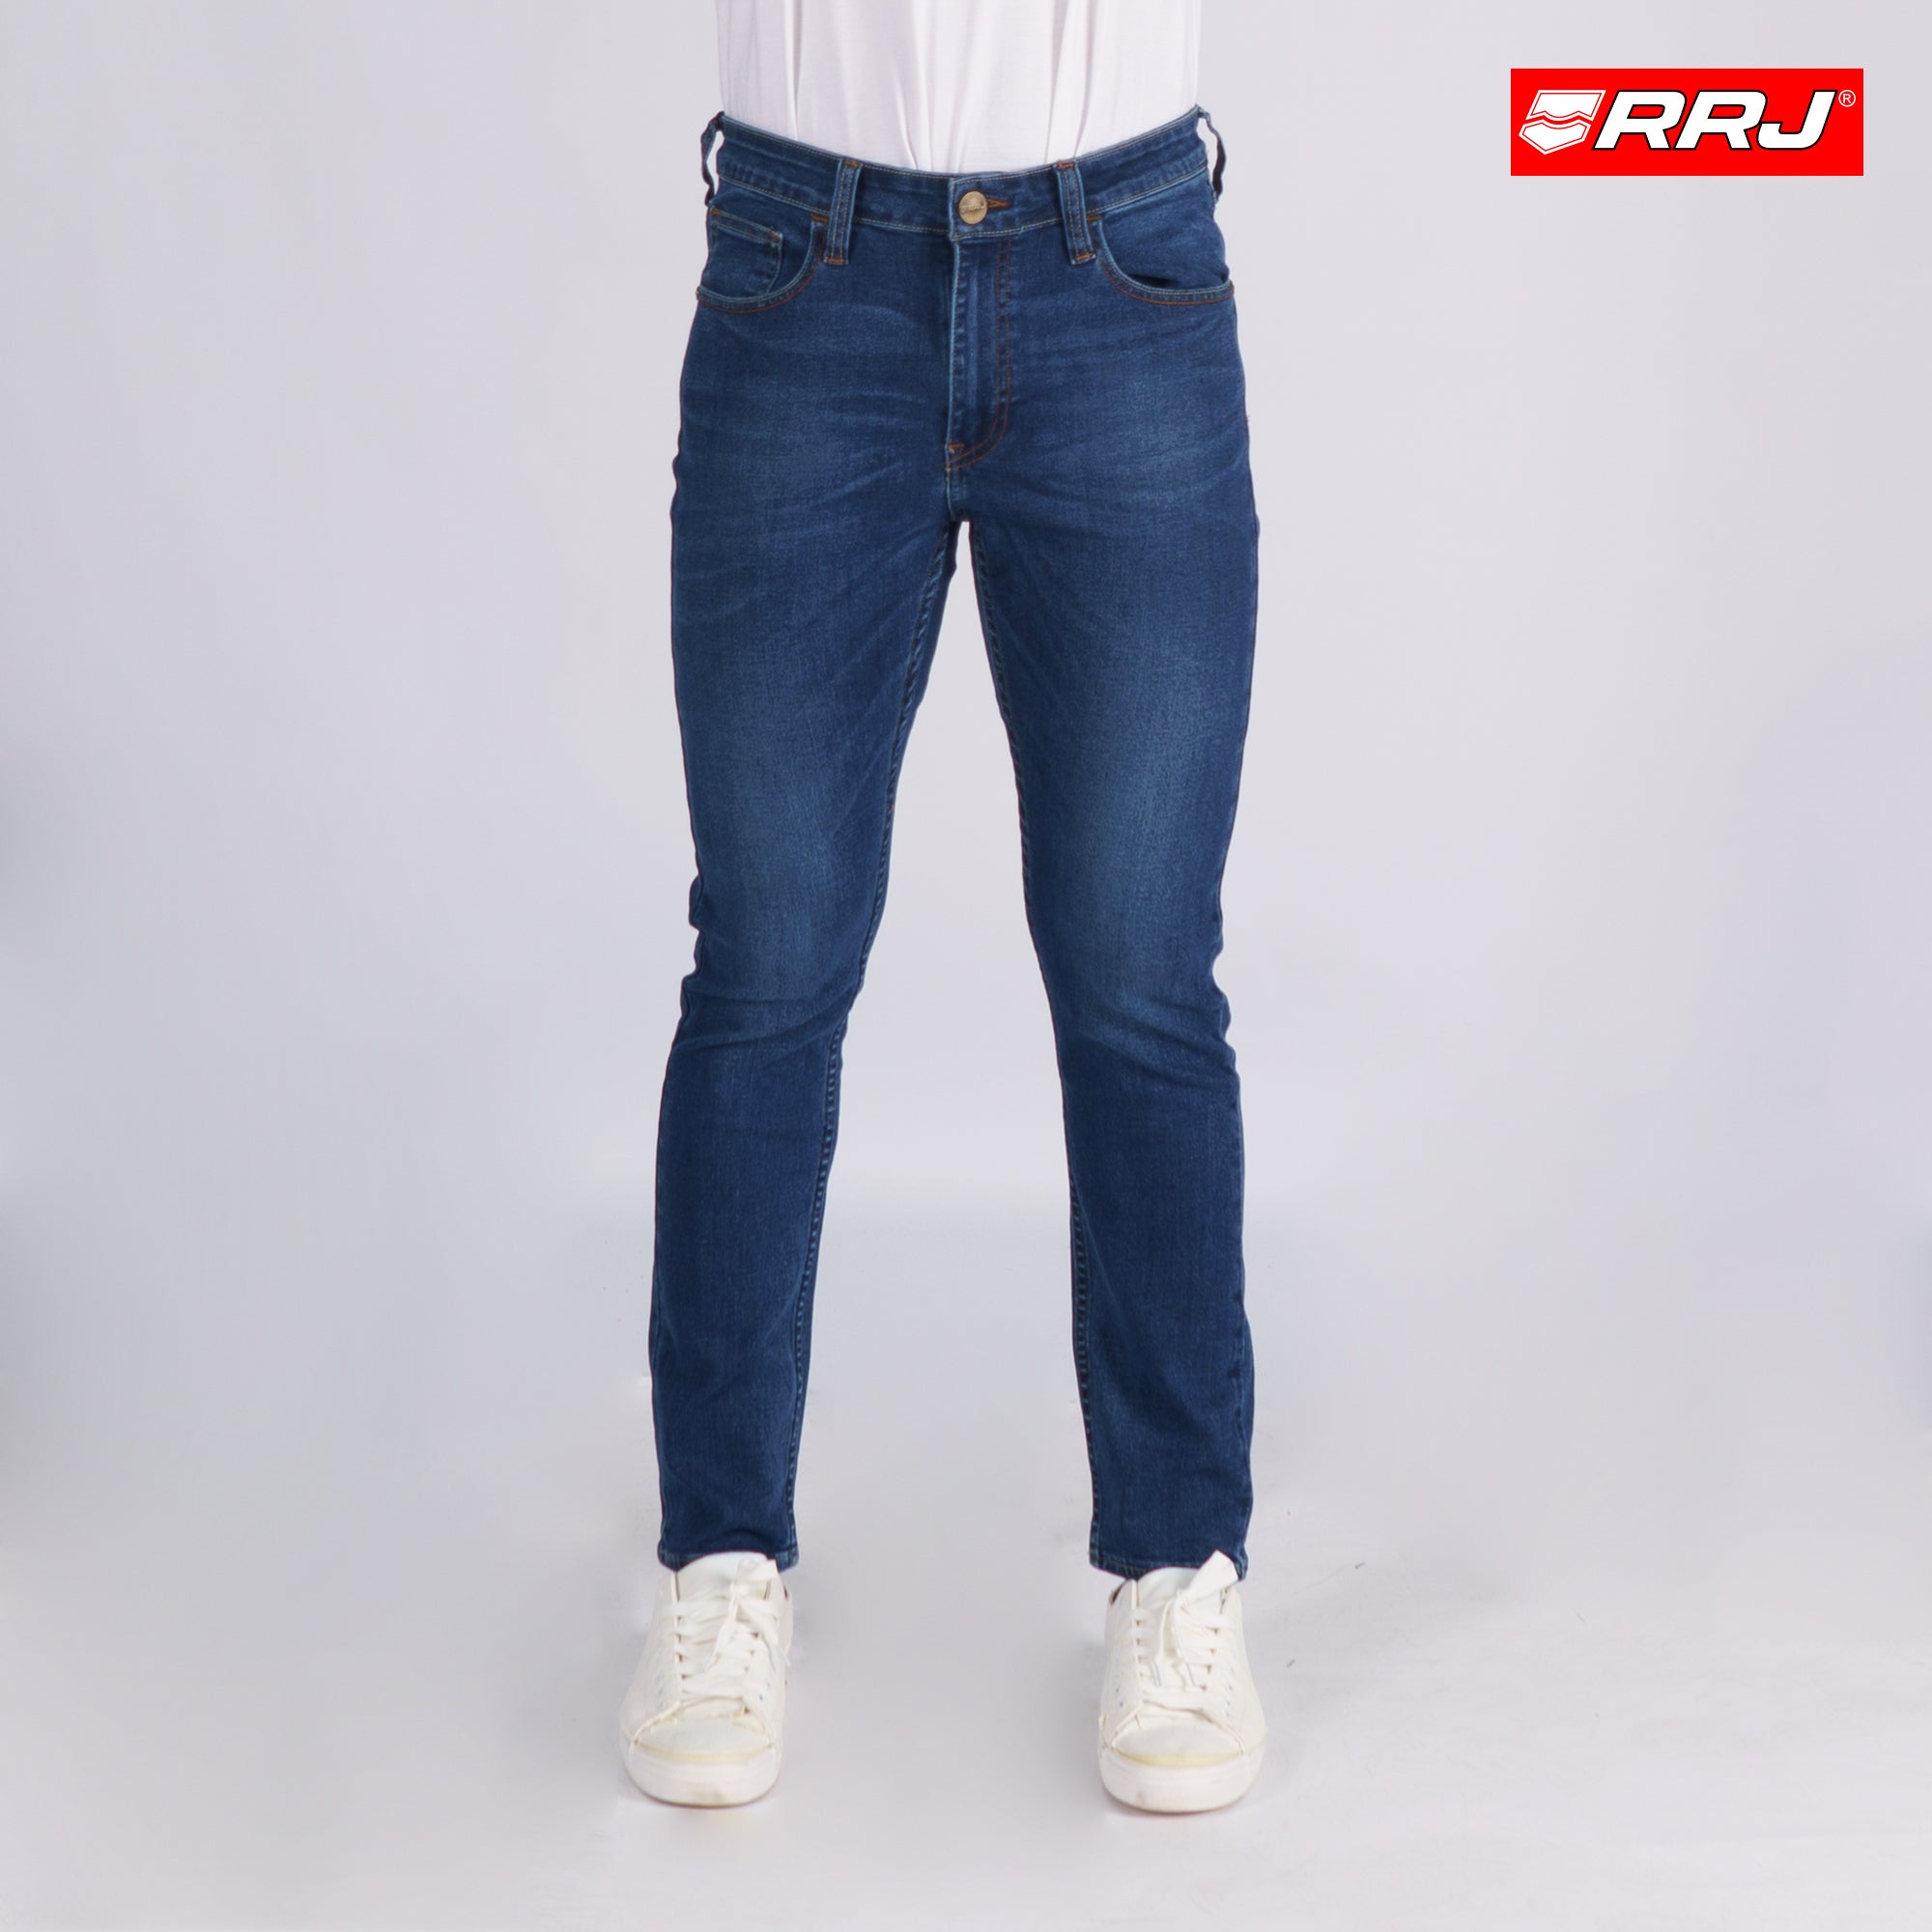 RRJ Men's Basic Denim Stretchable Pants Super skinny Fitting Mid